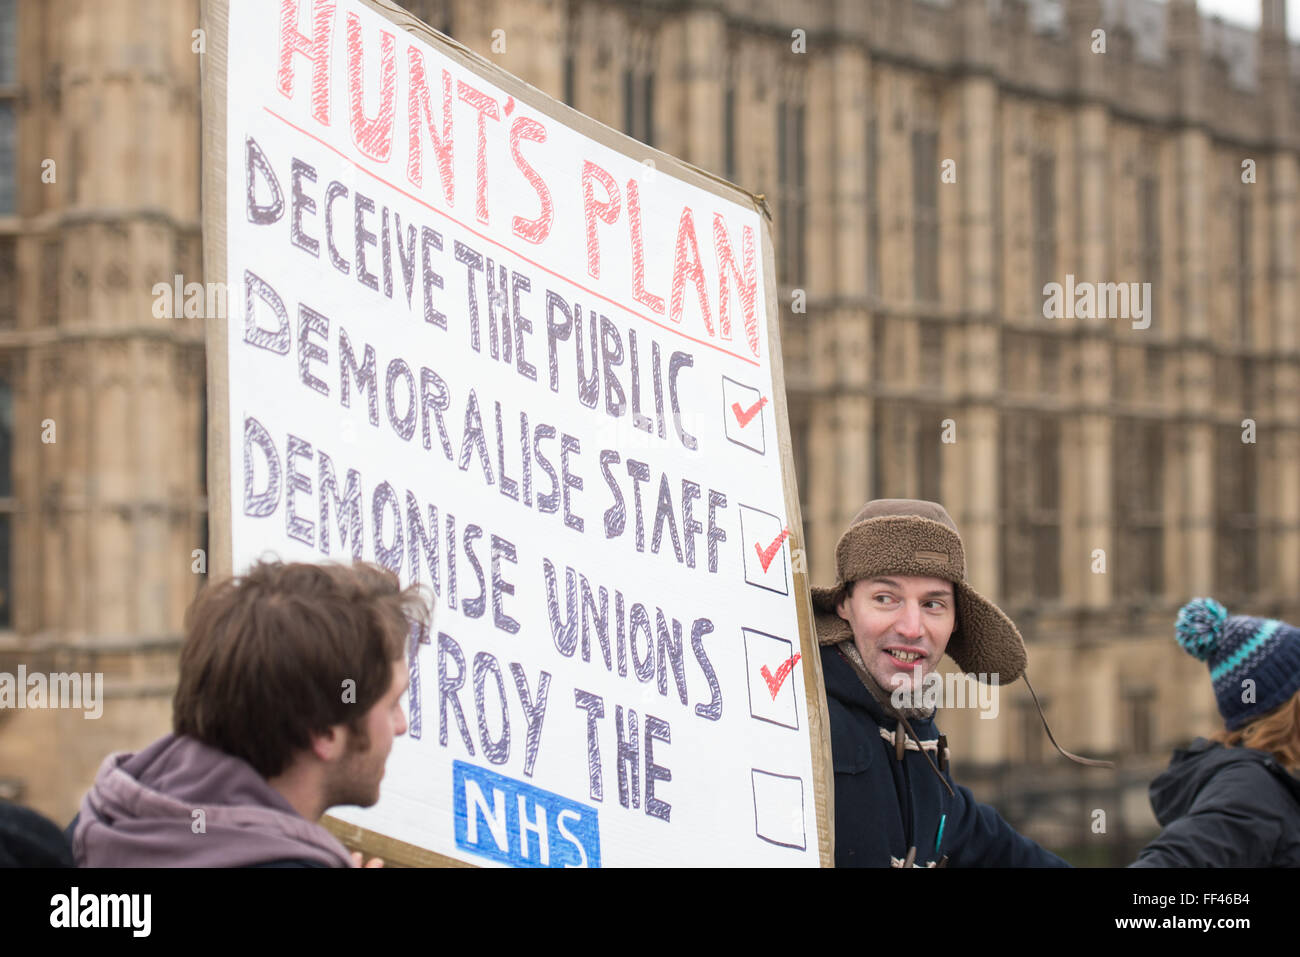 London, UK. 10th February 2016. Junior doctors march on Parliament © Ian Davidson/Alamy Live News Credit:  Ian Davidson/Alamy Live News Stock Photo